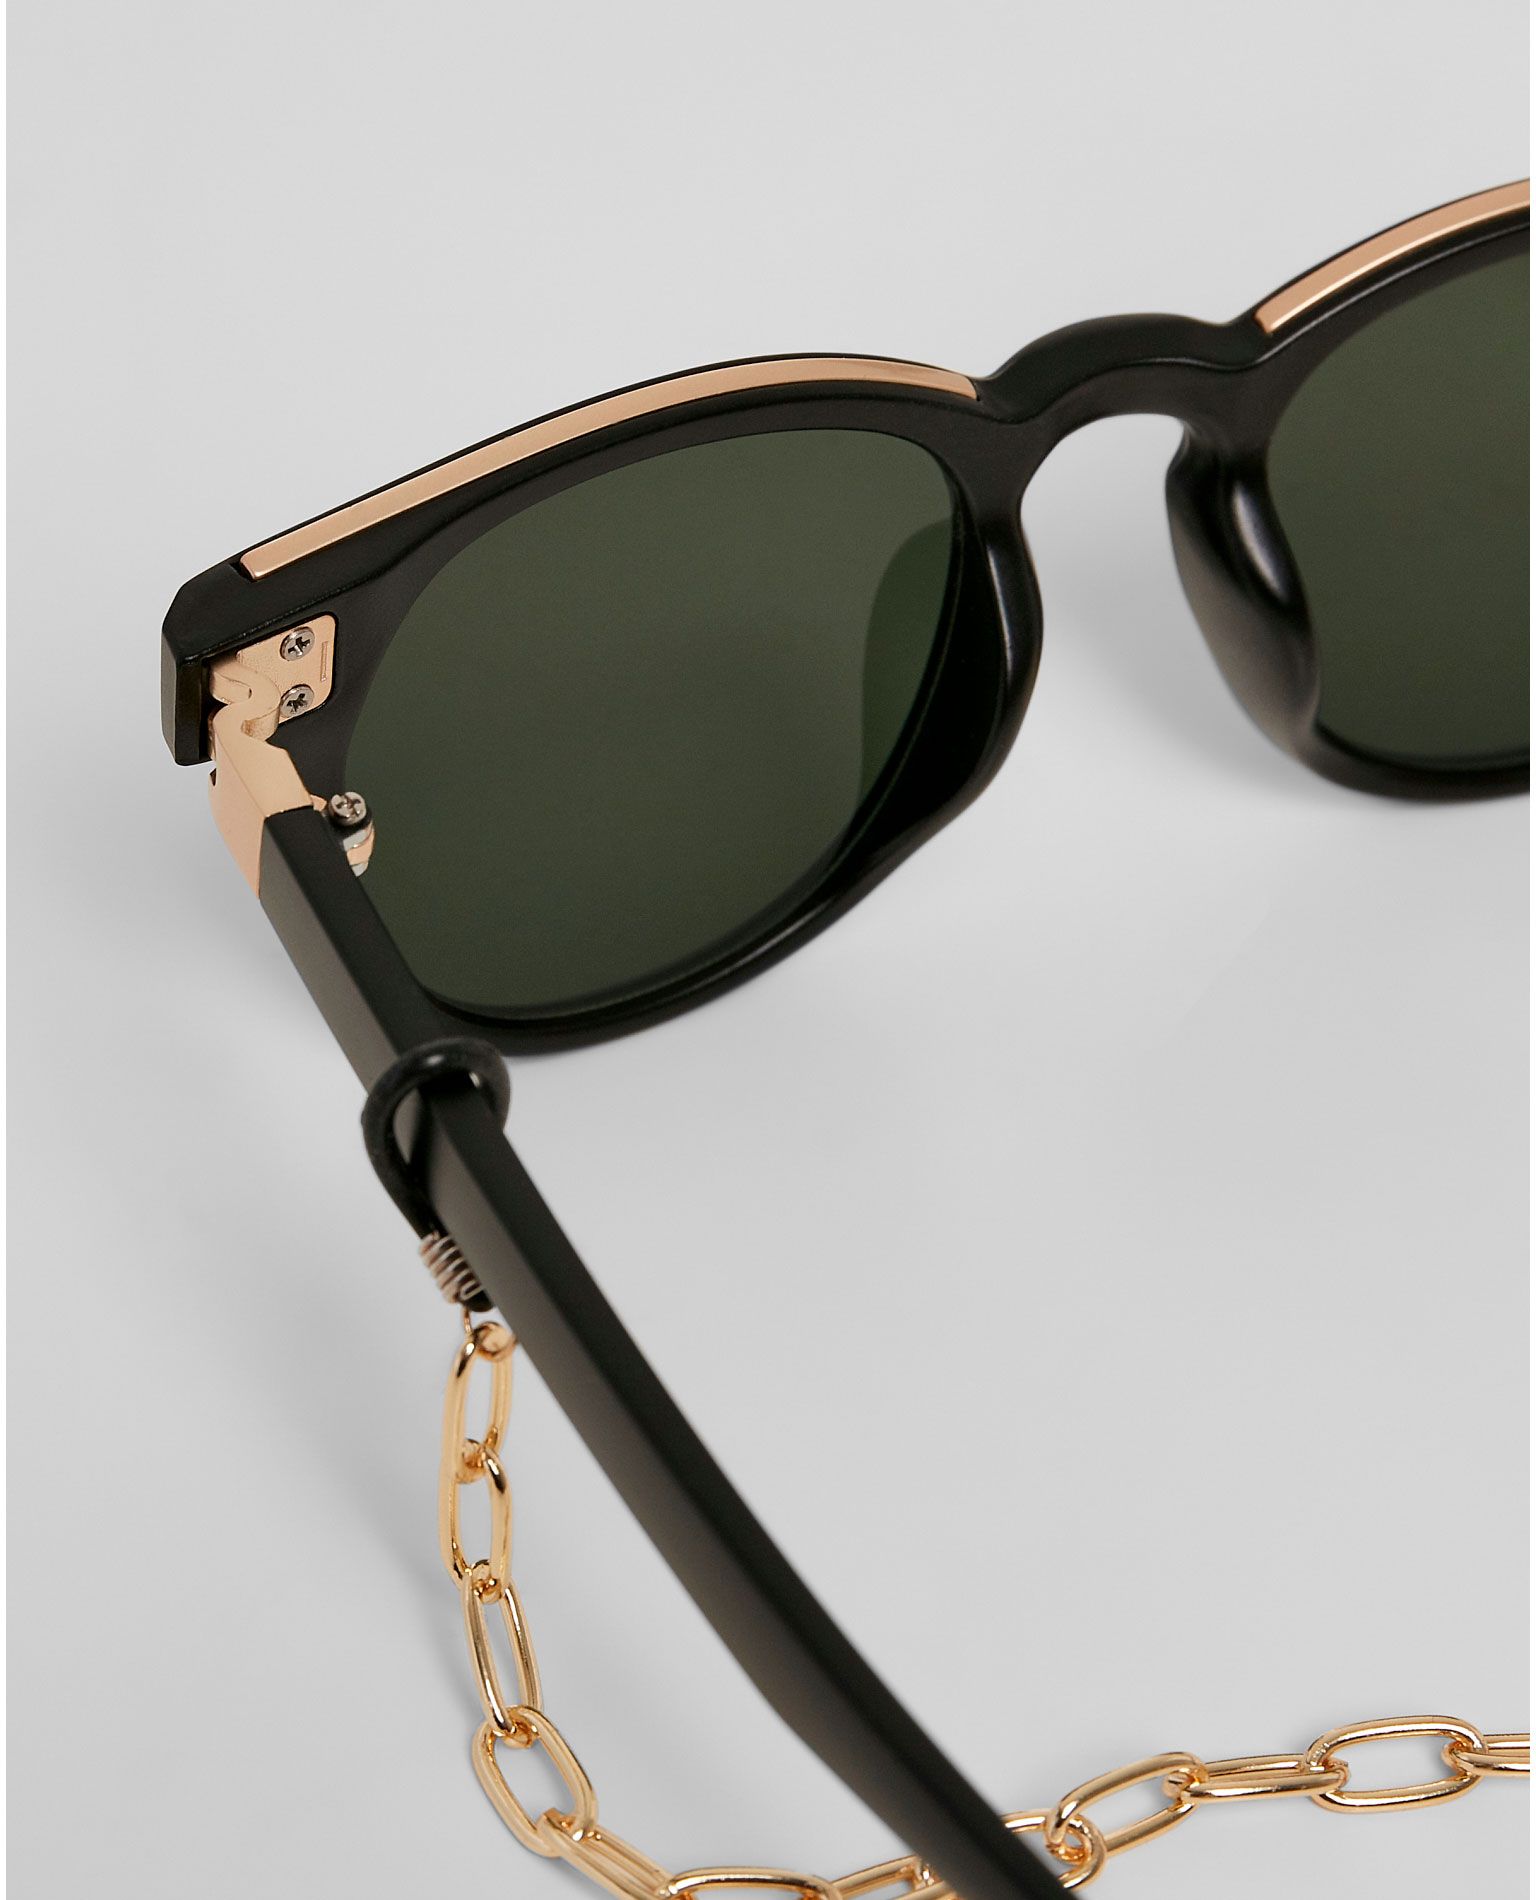 Chain Sunglasses Urban Italy With Classics